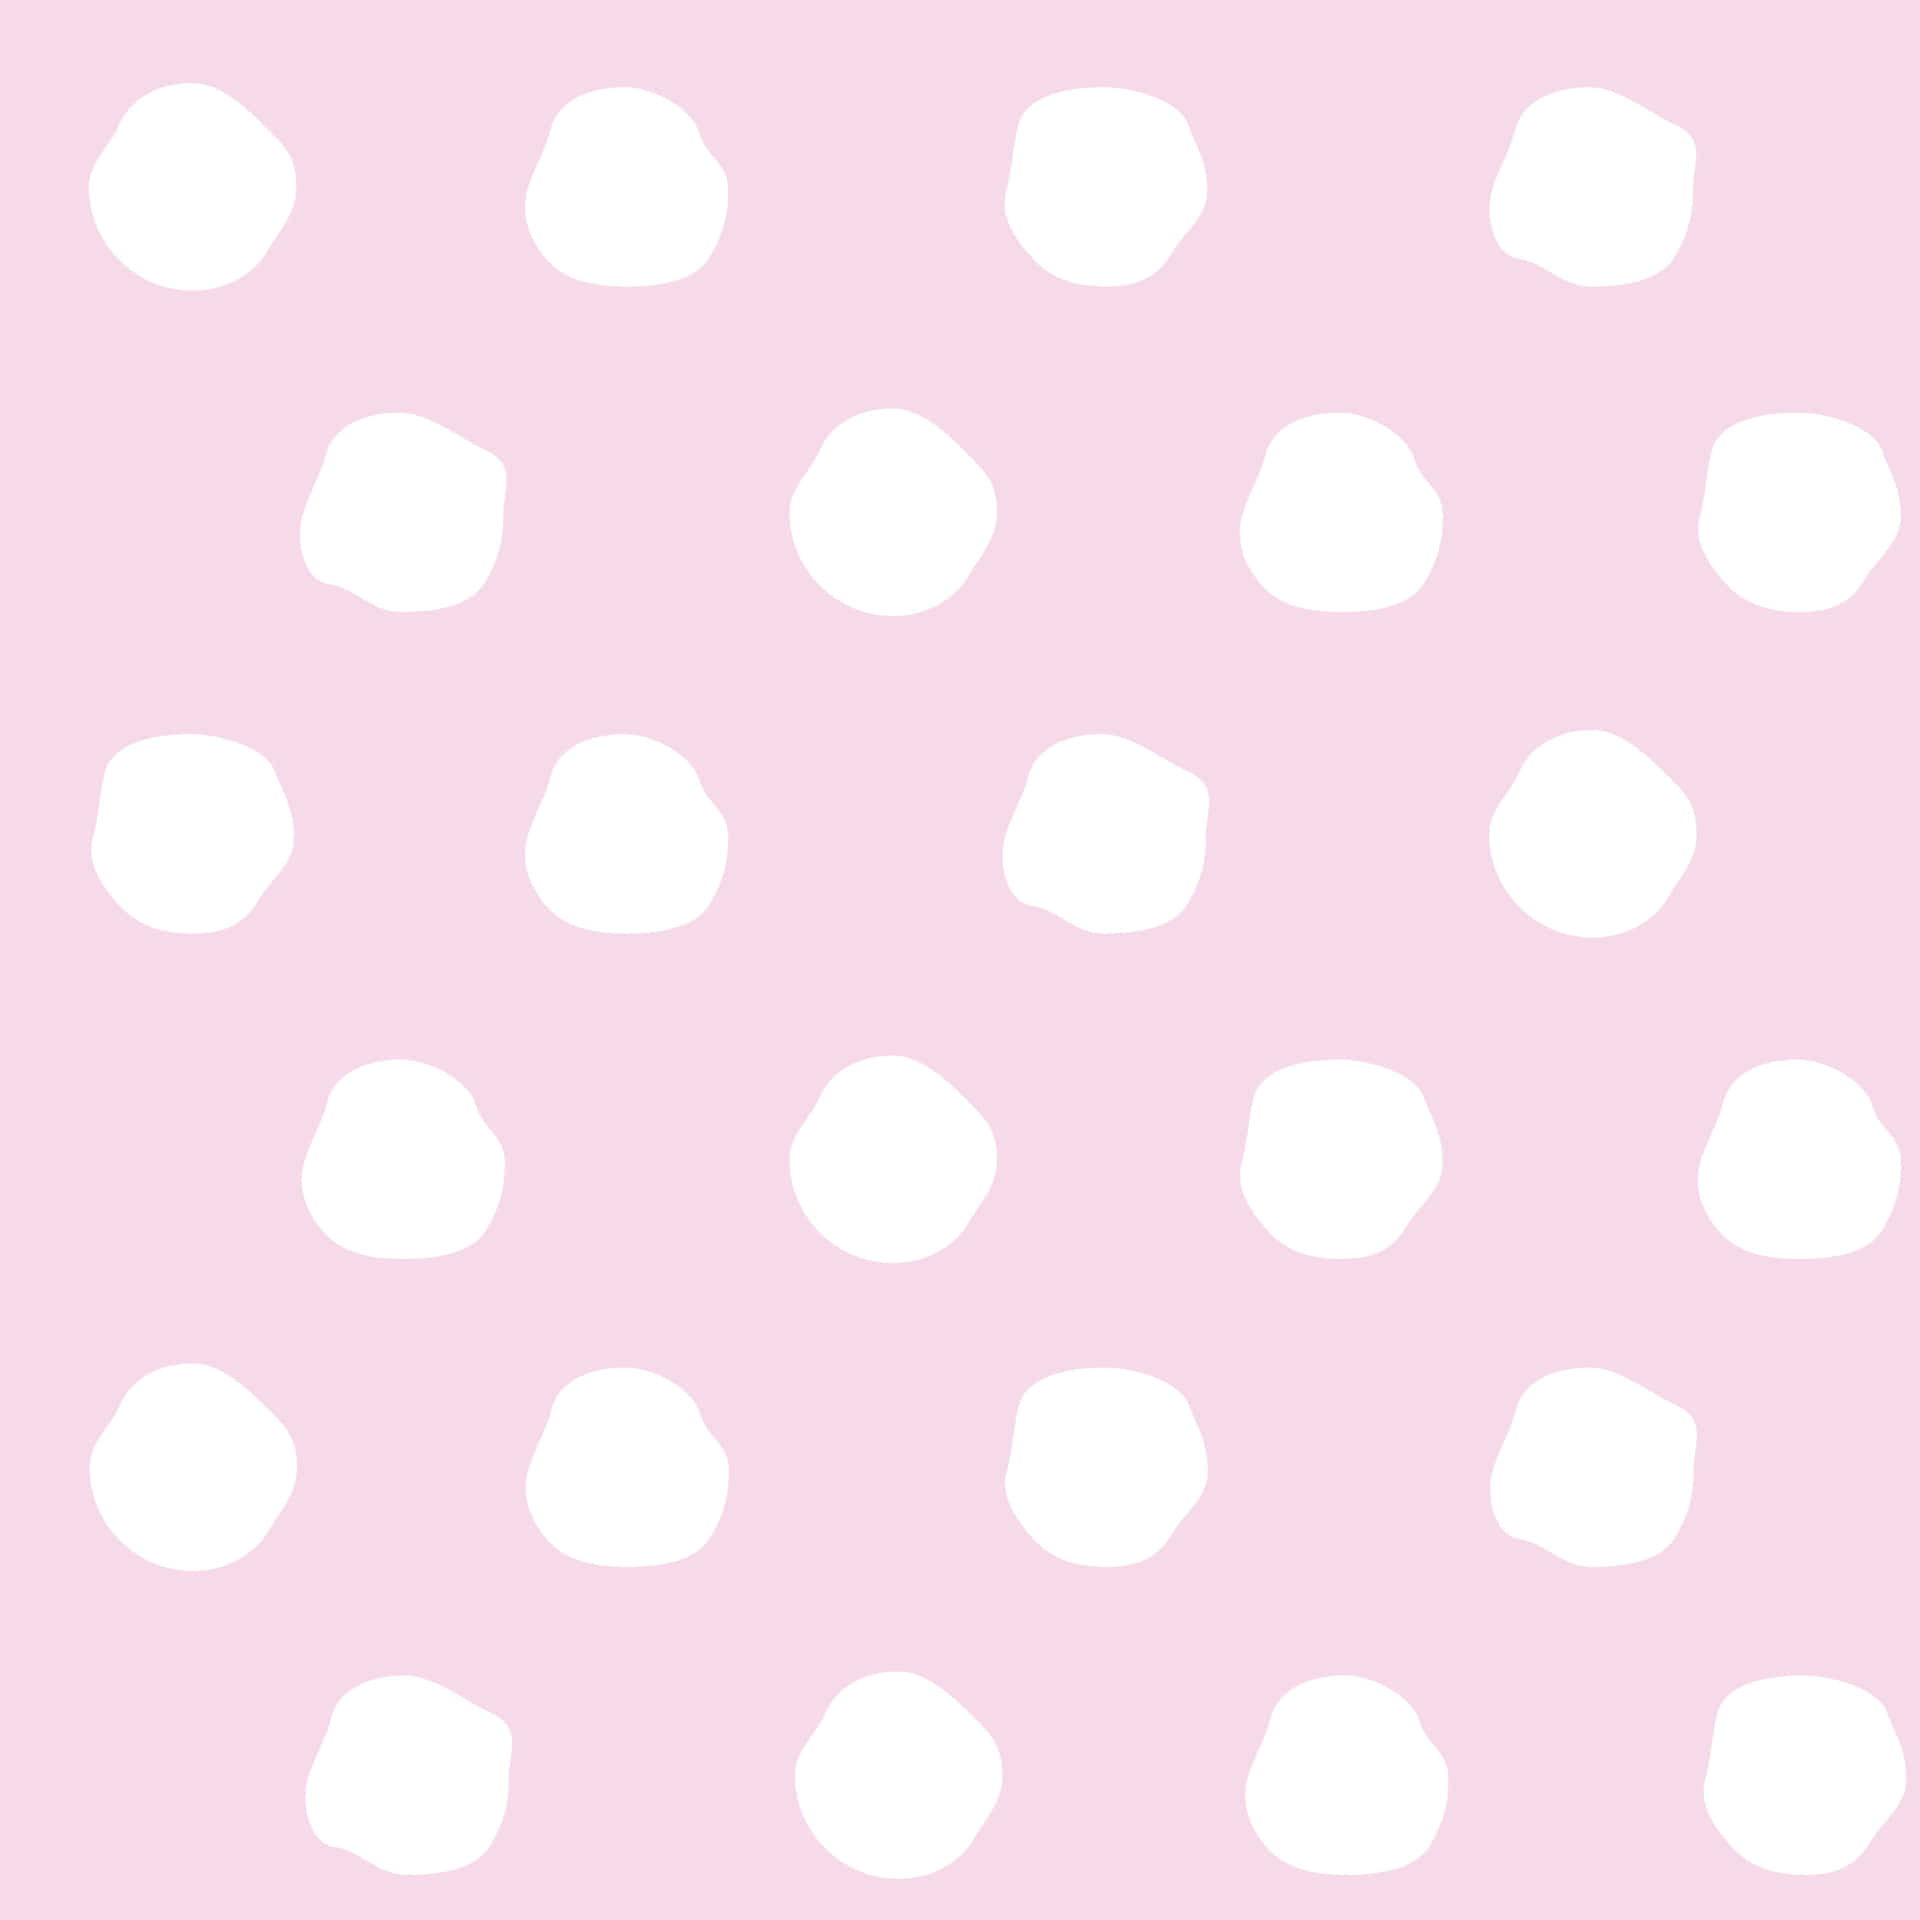 Adorable pink and white polka dot pattern Wallpaper